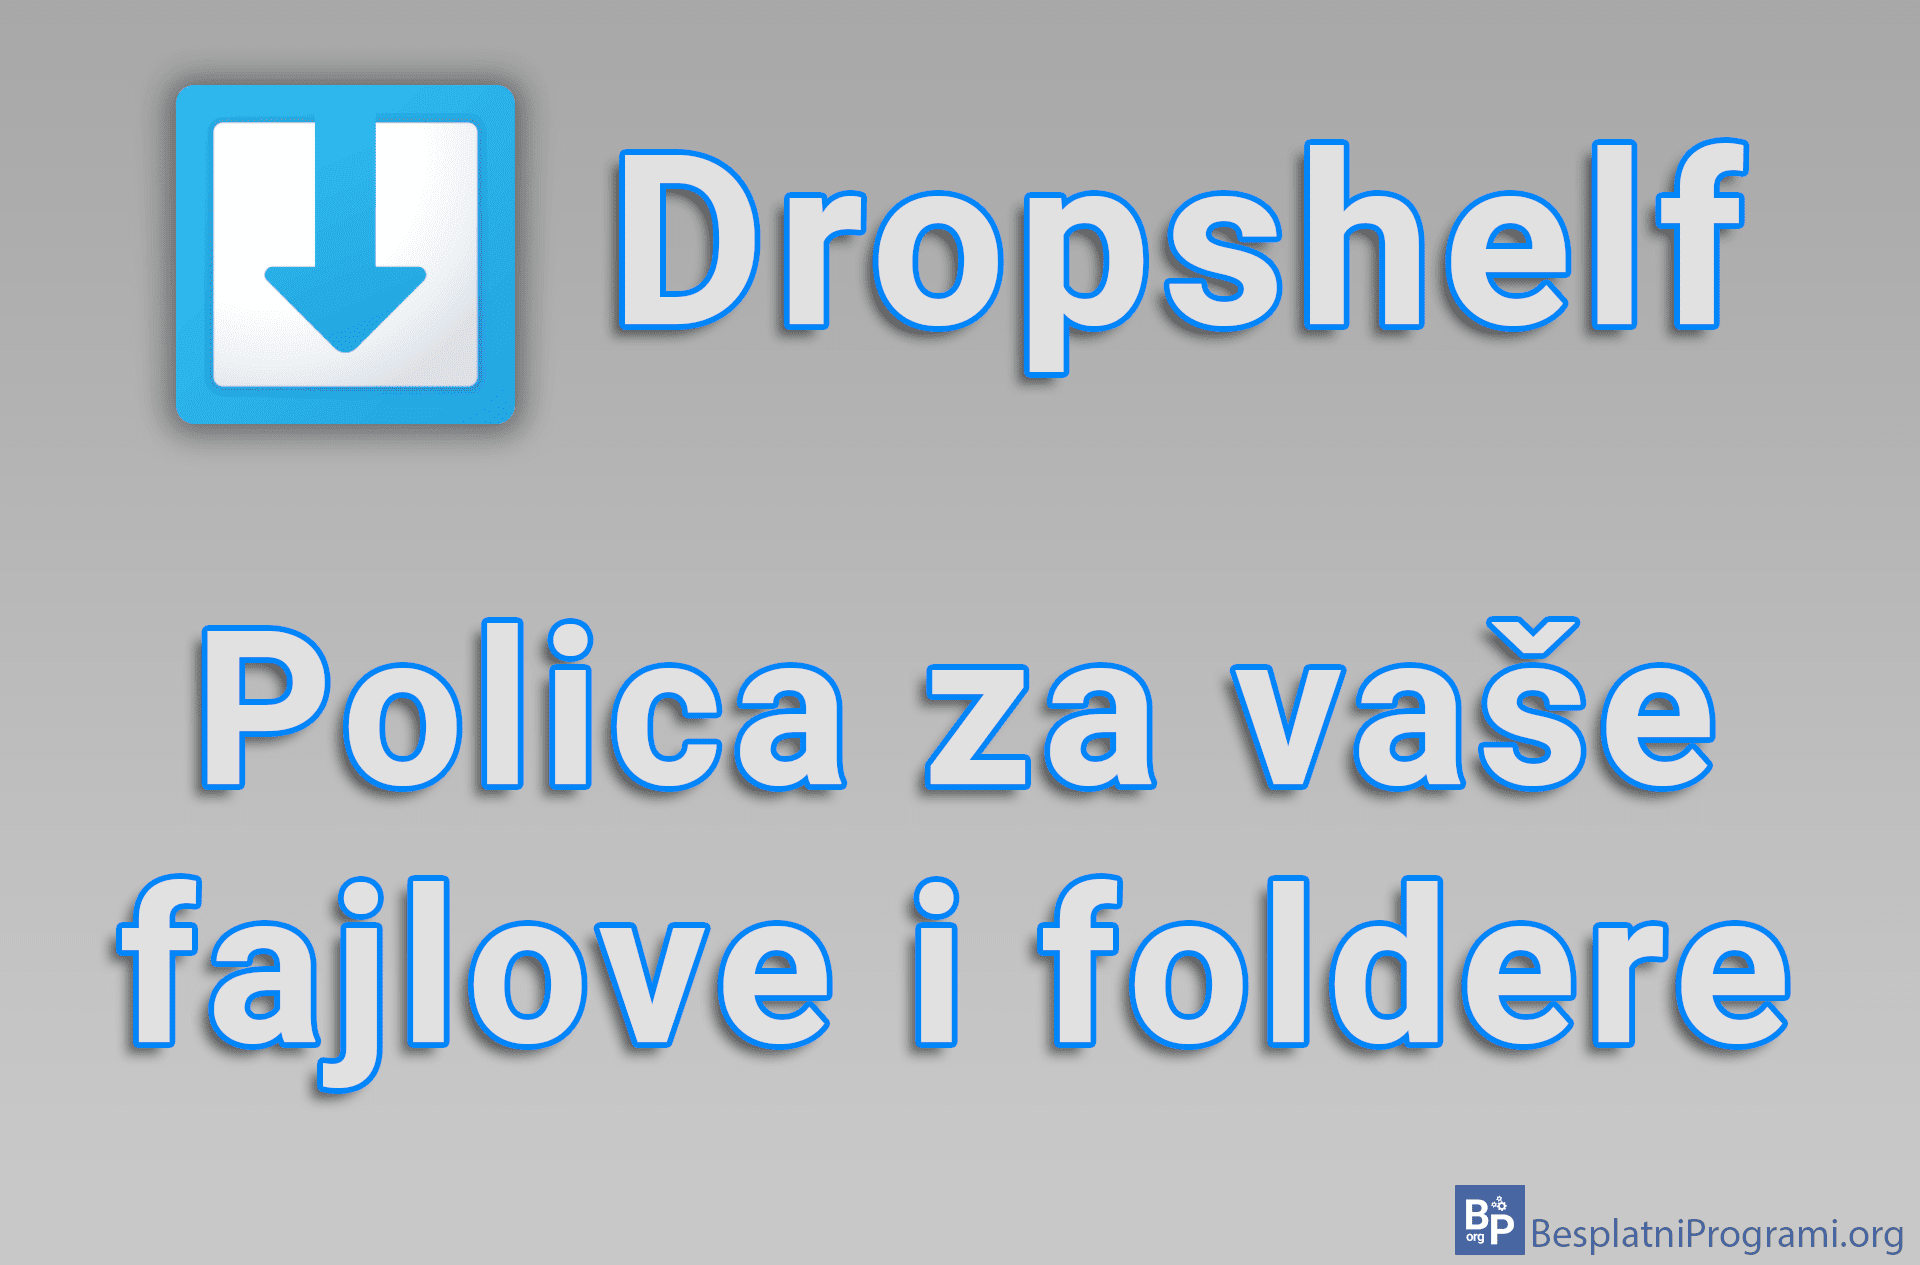 Dropshelf – Polica za vaše fajlove i foldere